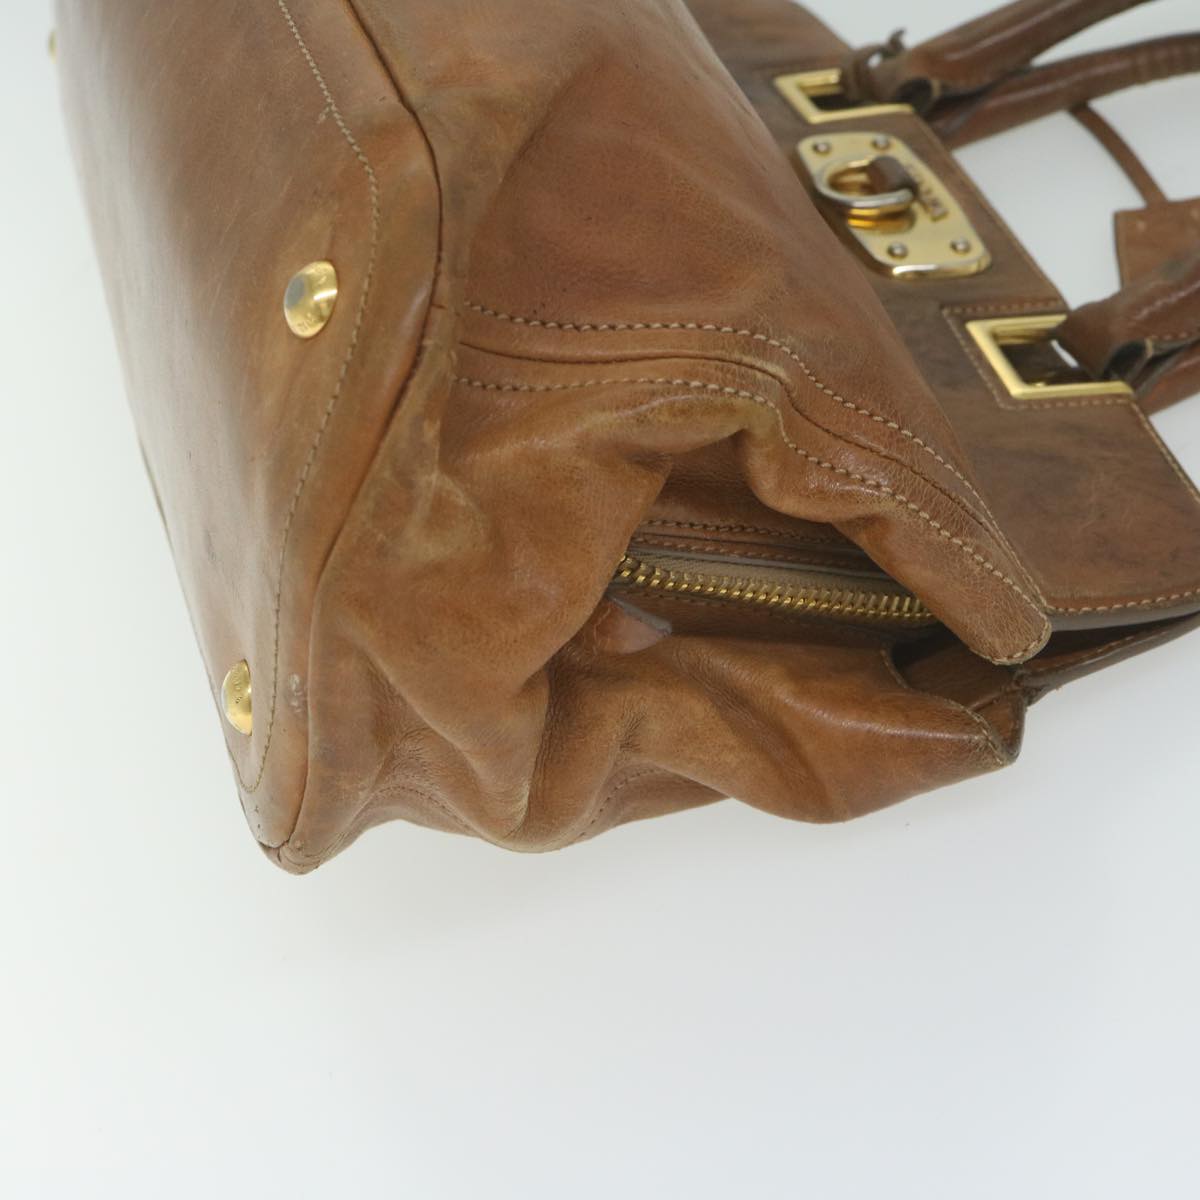 PRADA Hand Bag Leather 2way Brown Auth bs10941